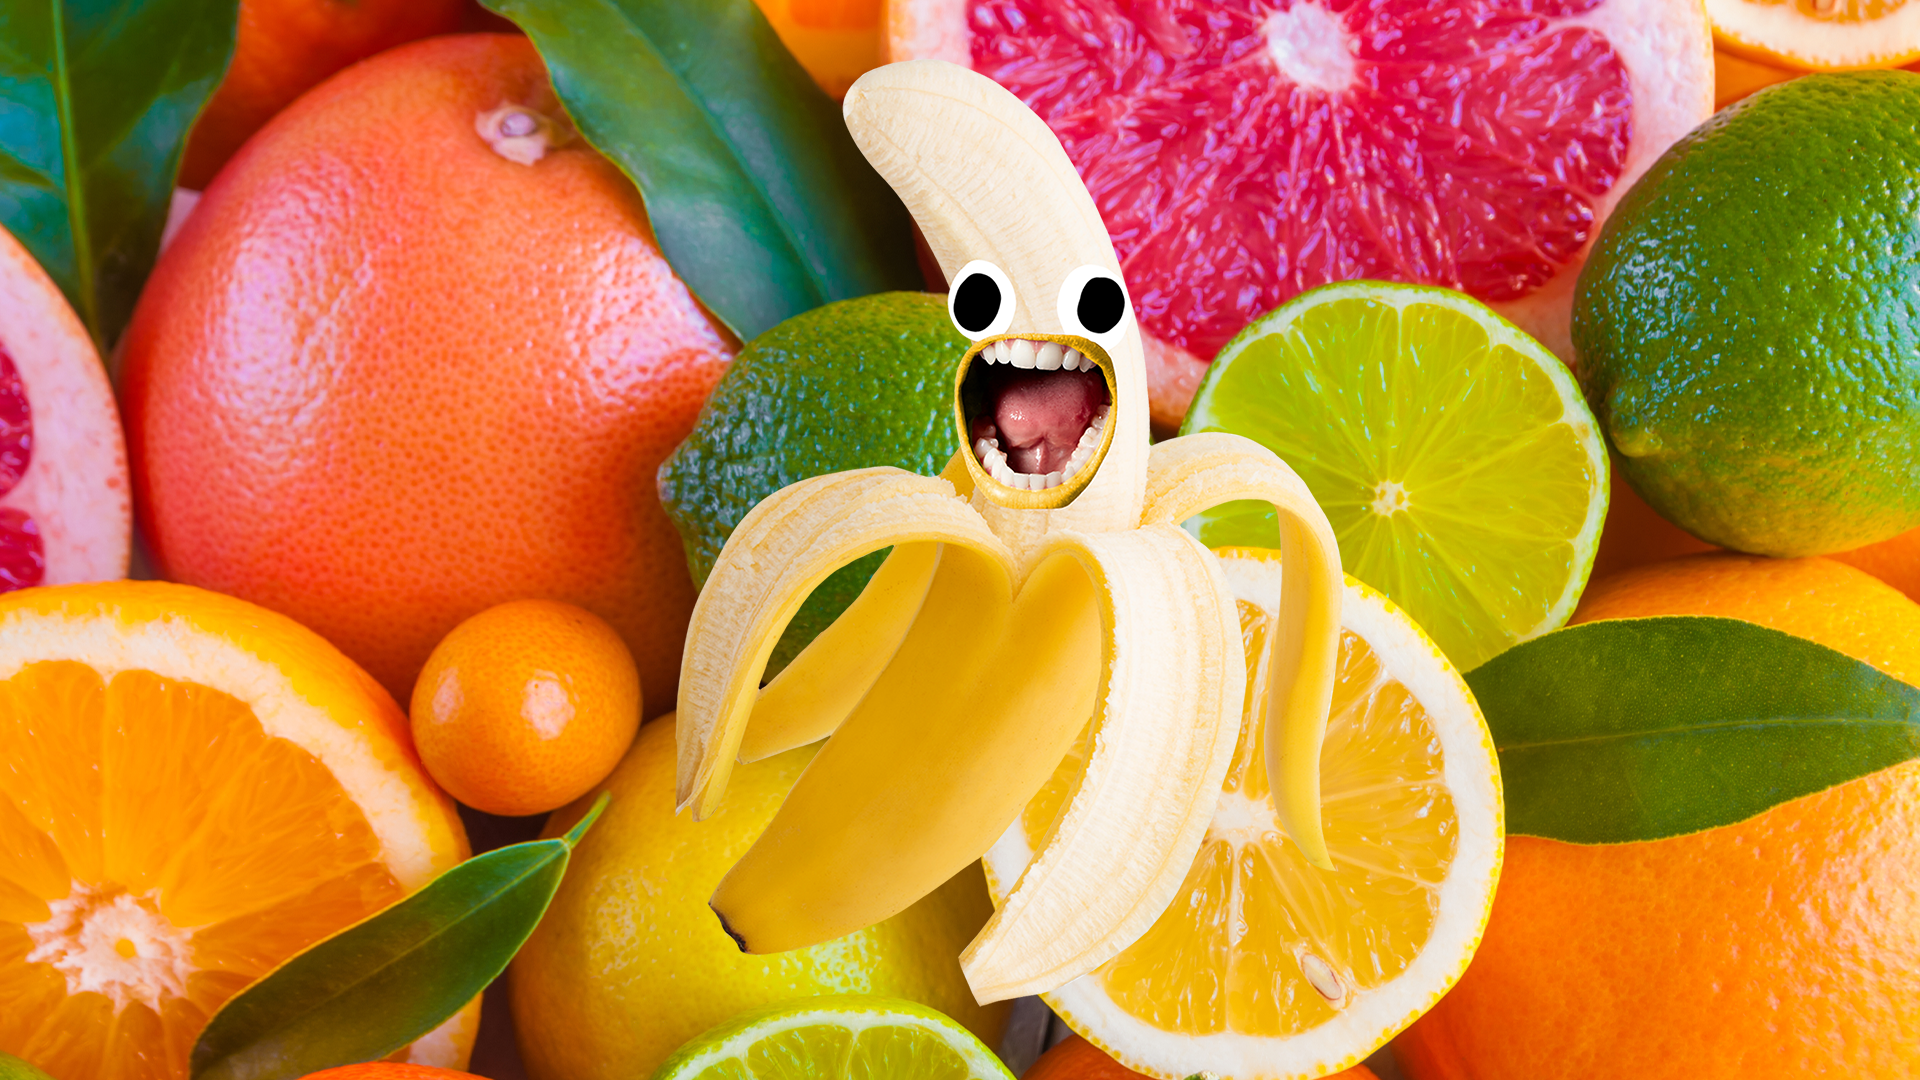 Citrus fruit background and screaming Beano banana